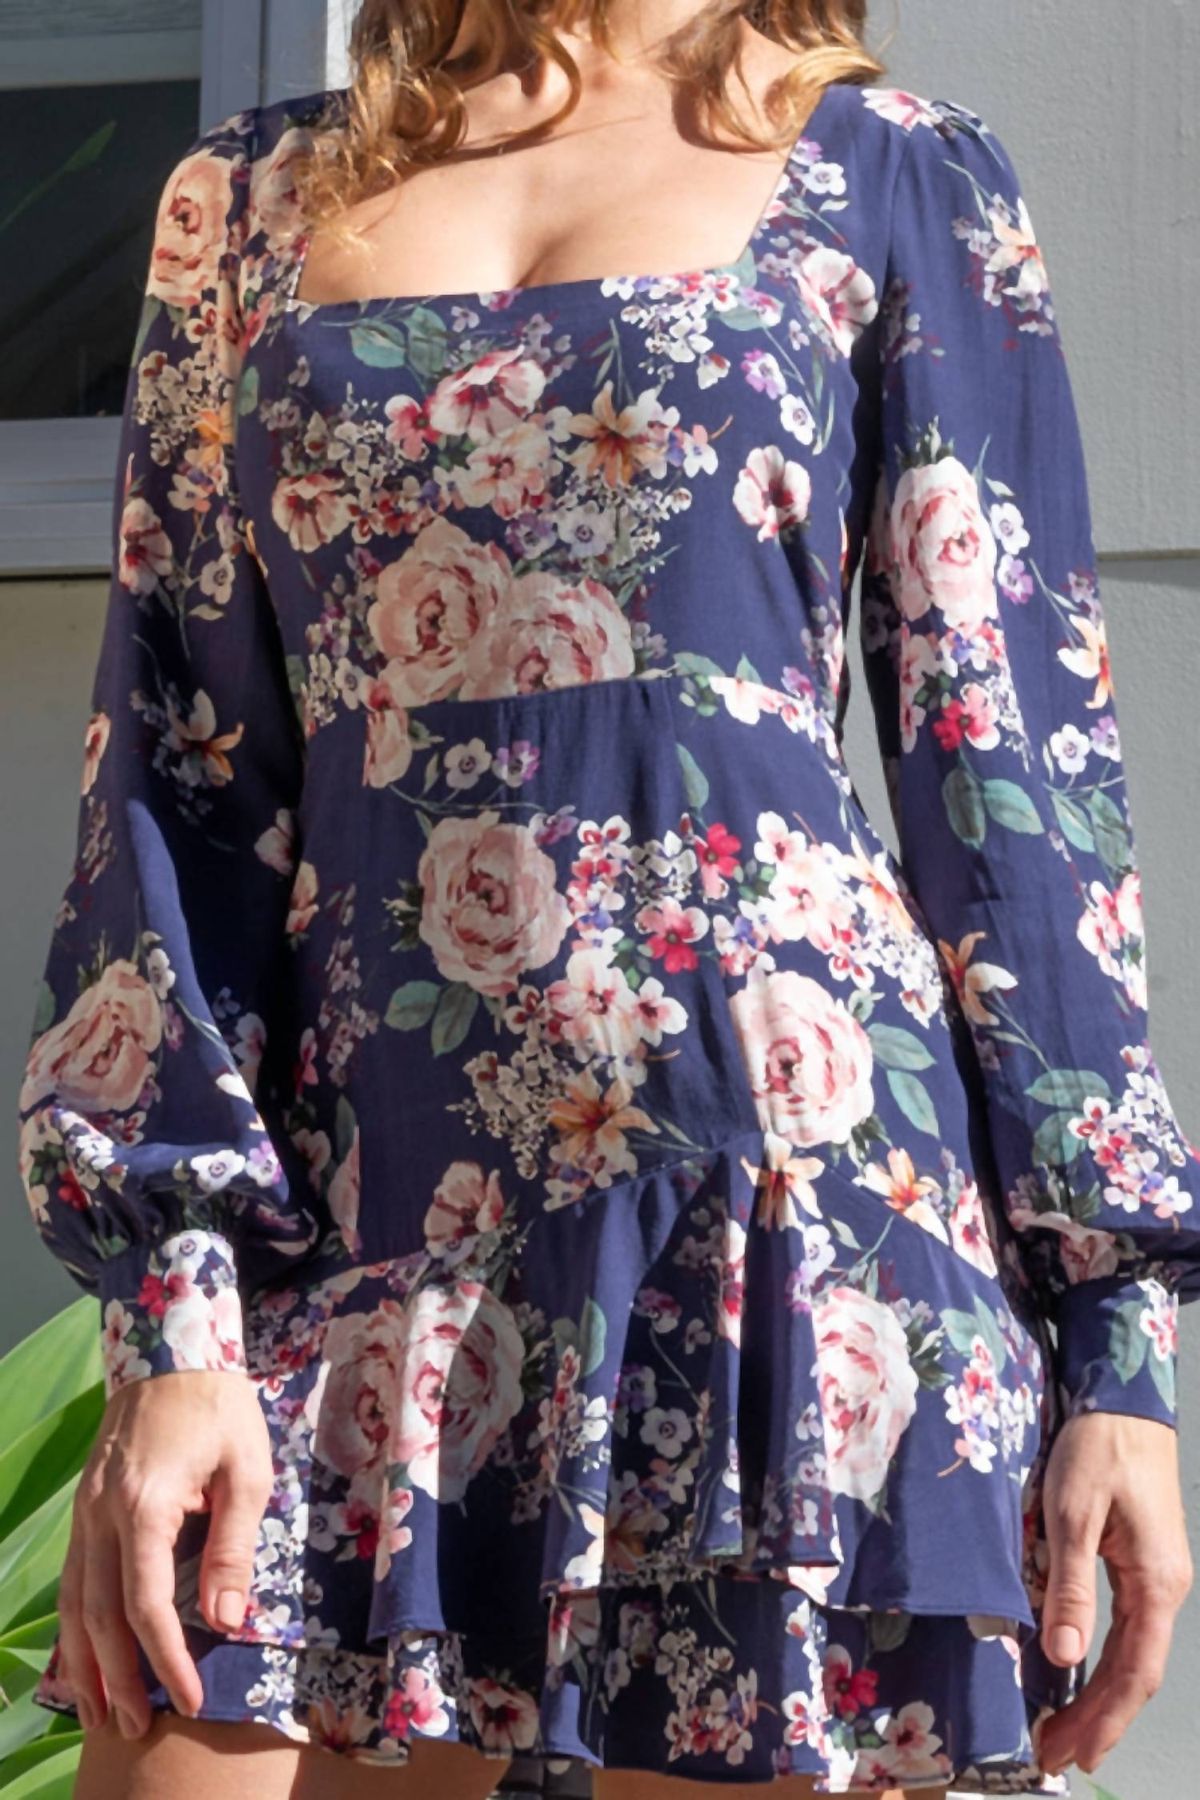 Yumi Navy Long Sleeve Floral Maxi Dress